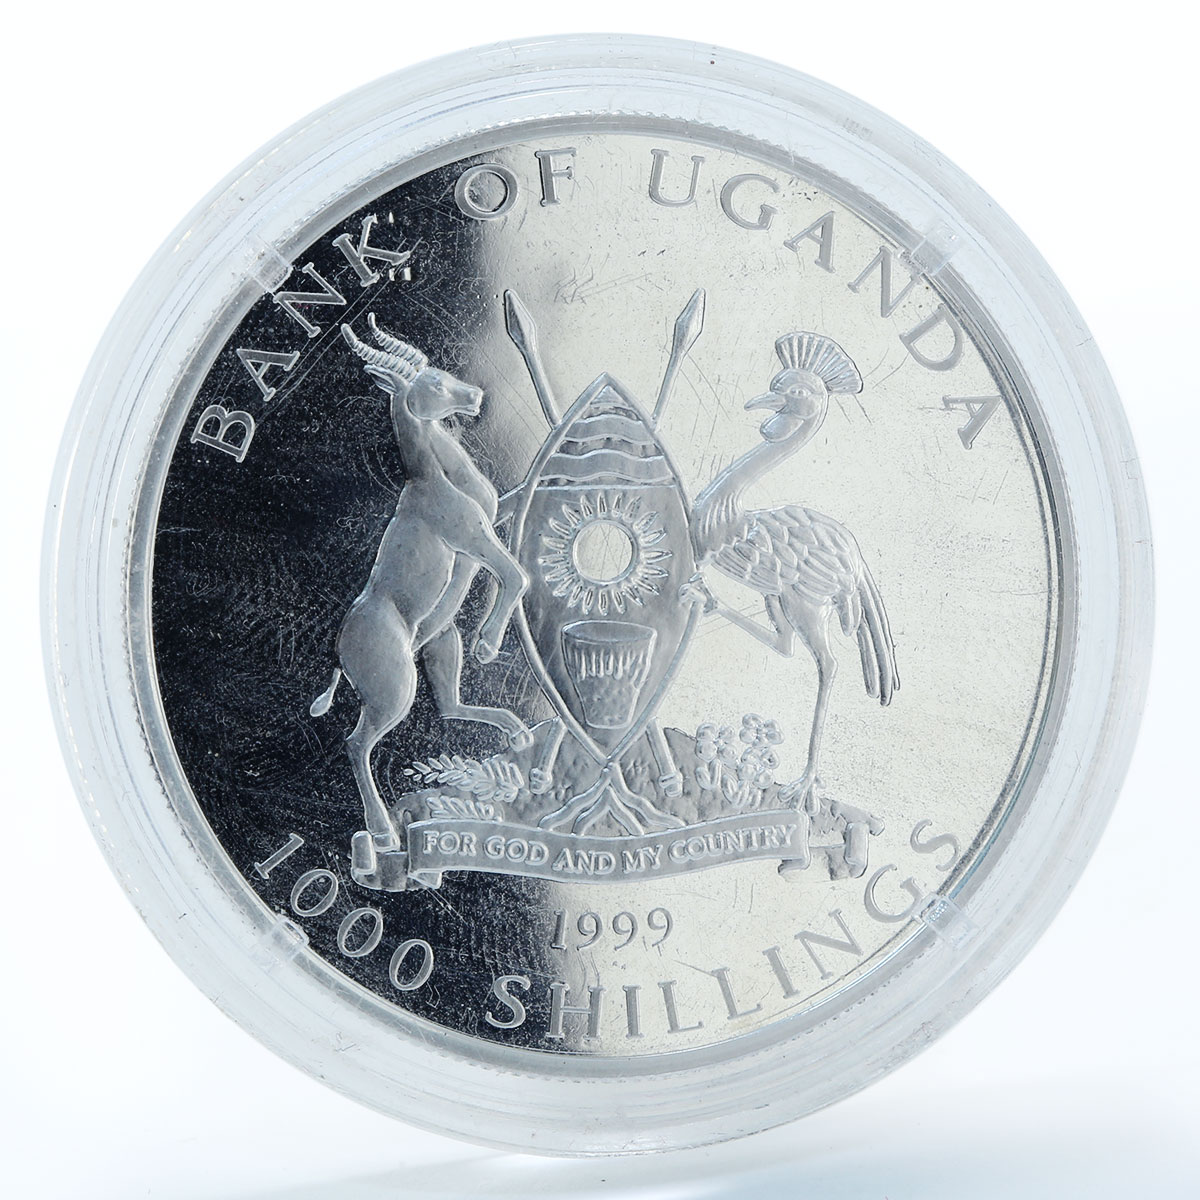 Uganda 1000 shillings Endangered Wildlife Tiger proof silver coin 1999